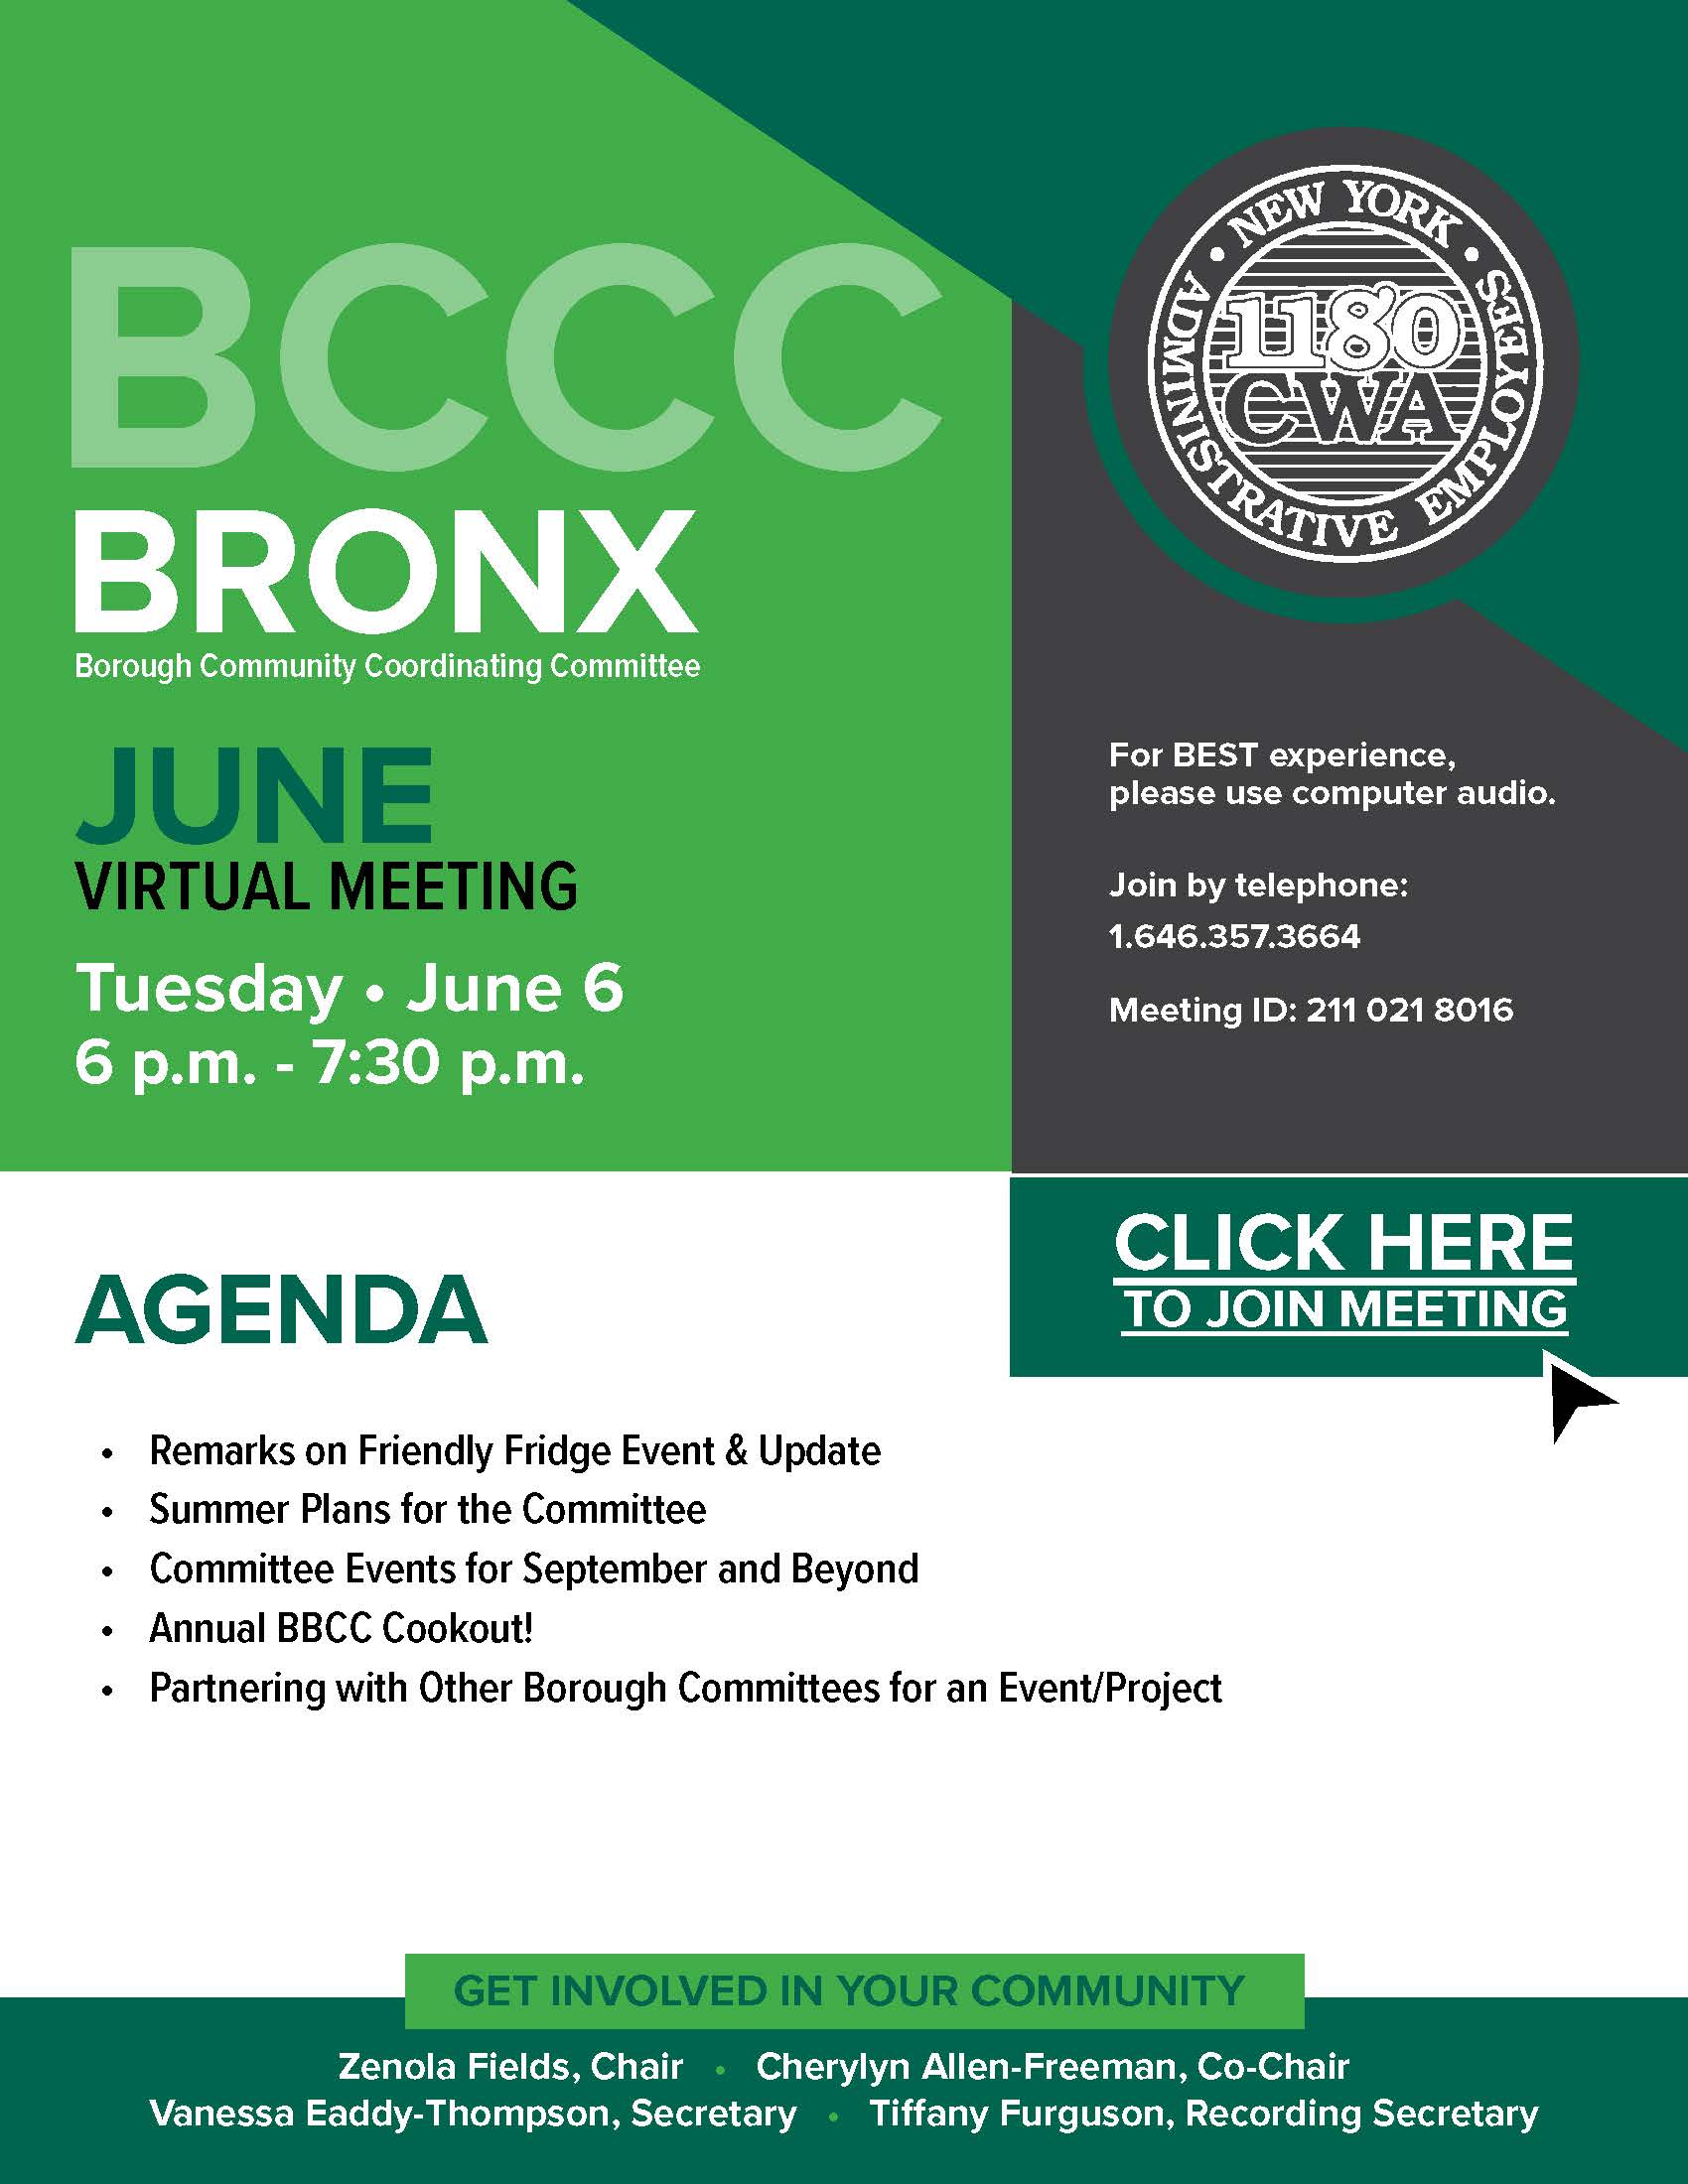 BCCC Bronx June